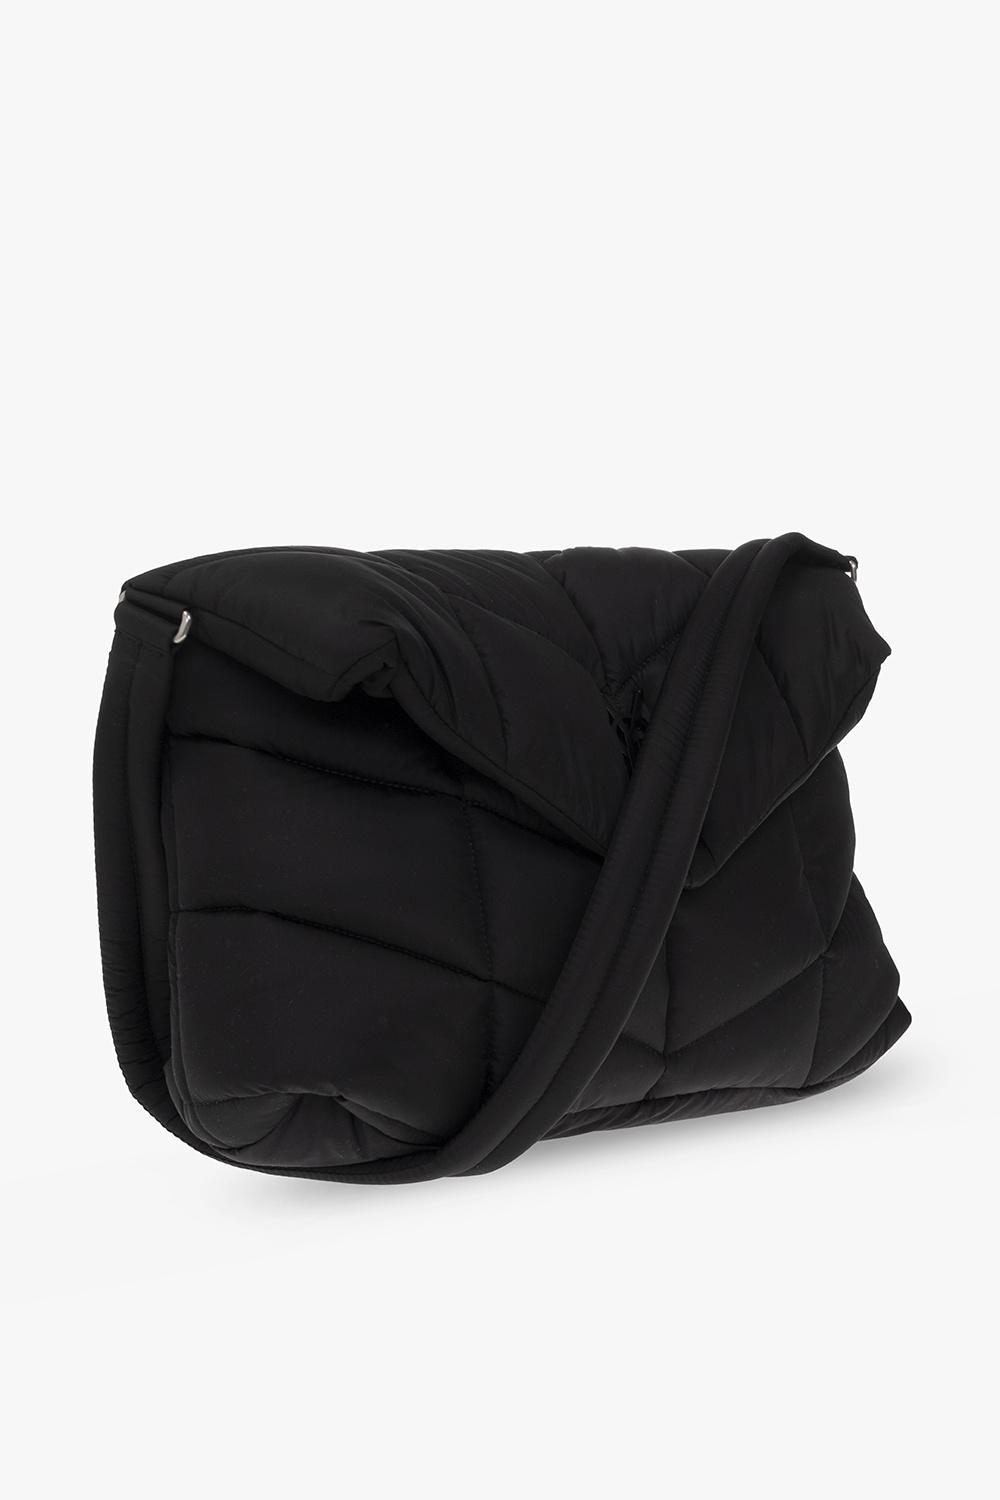 Saint Laurent ‘Puffer’ shoulder bag